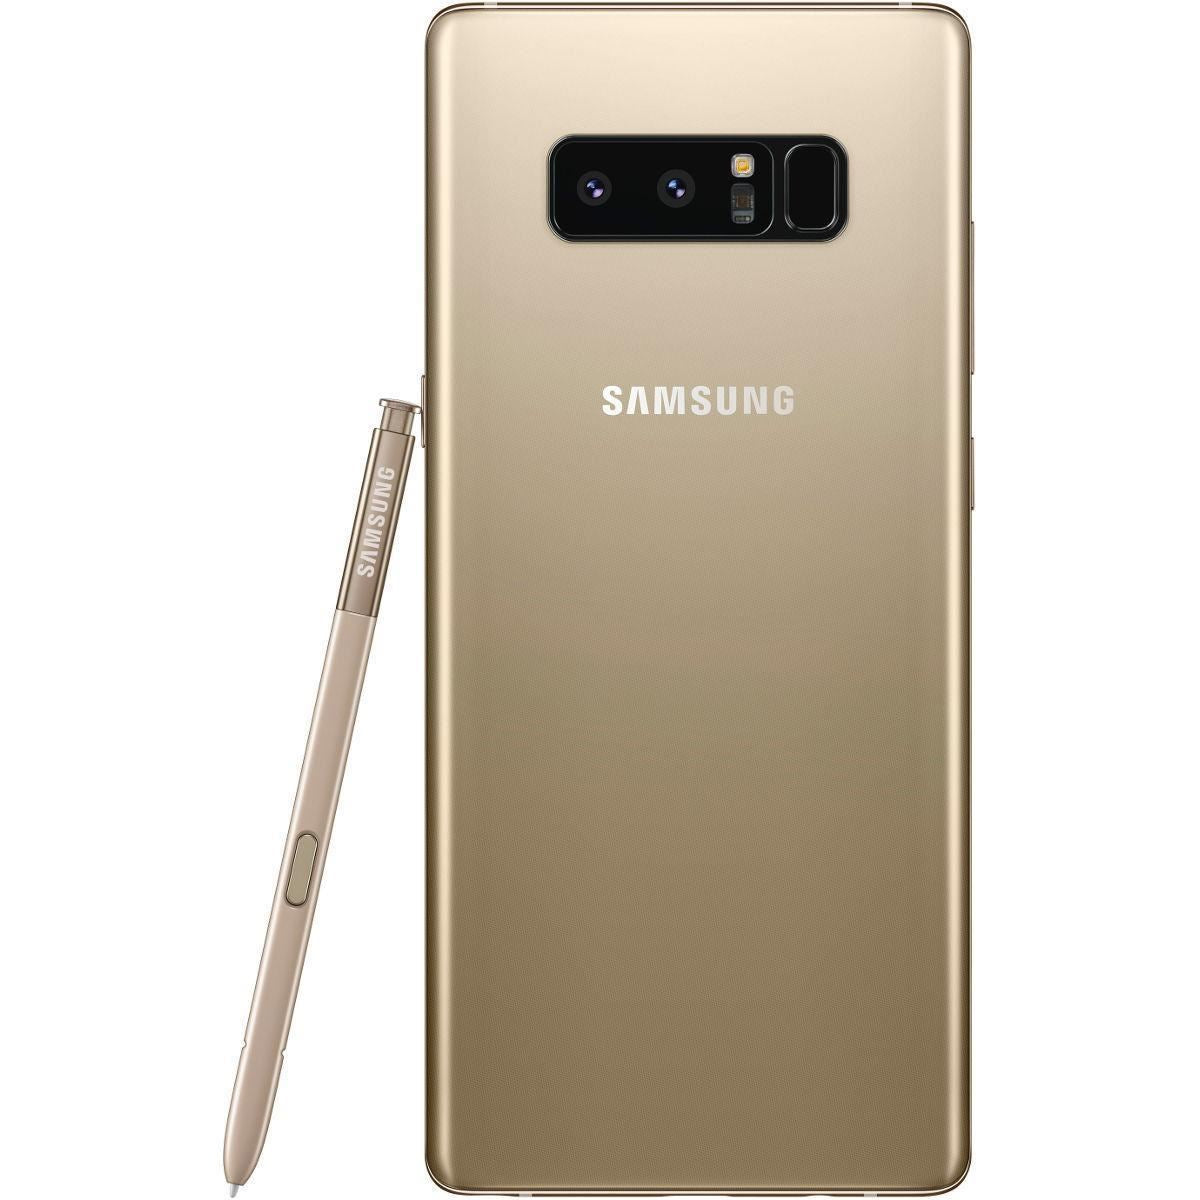 Samsung Galaxy Note 8 4G Smartphone Unlocked 64-128-256GB